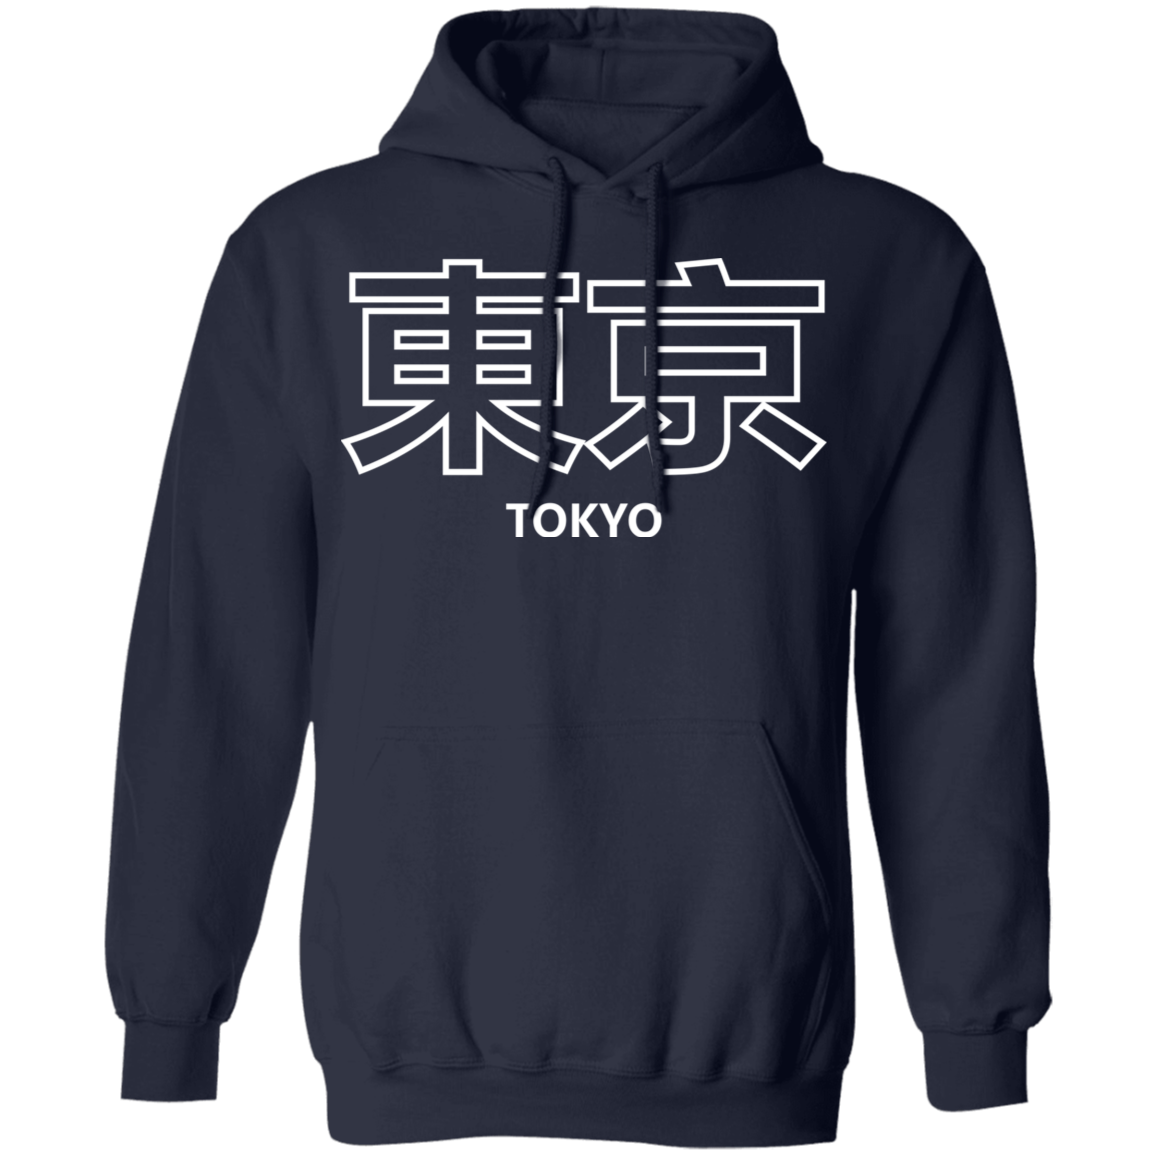 Tokyo White Kanji Font Pullover Hoodie - Happy Spring Tee free shipping